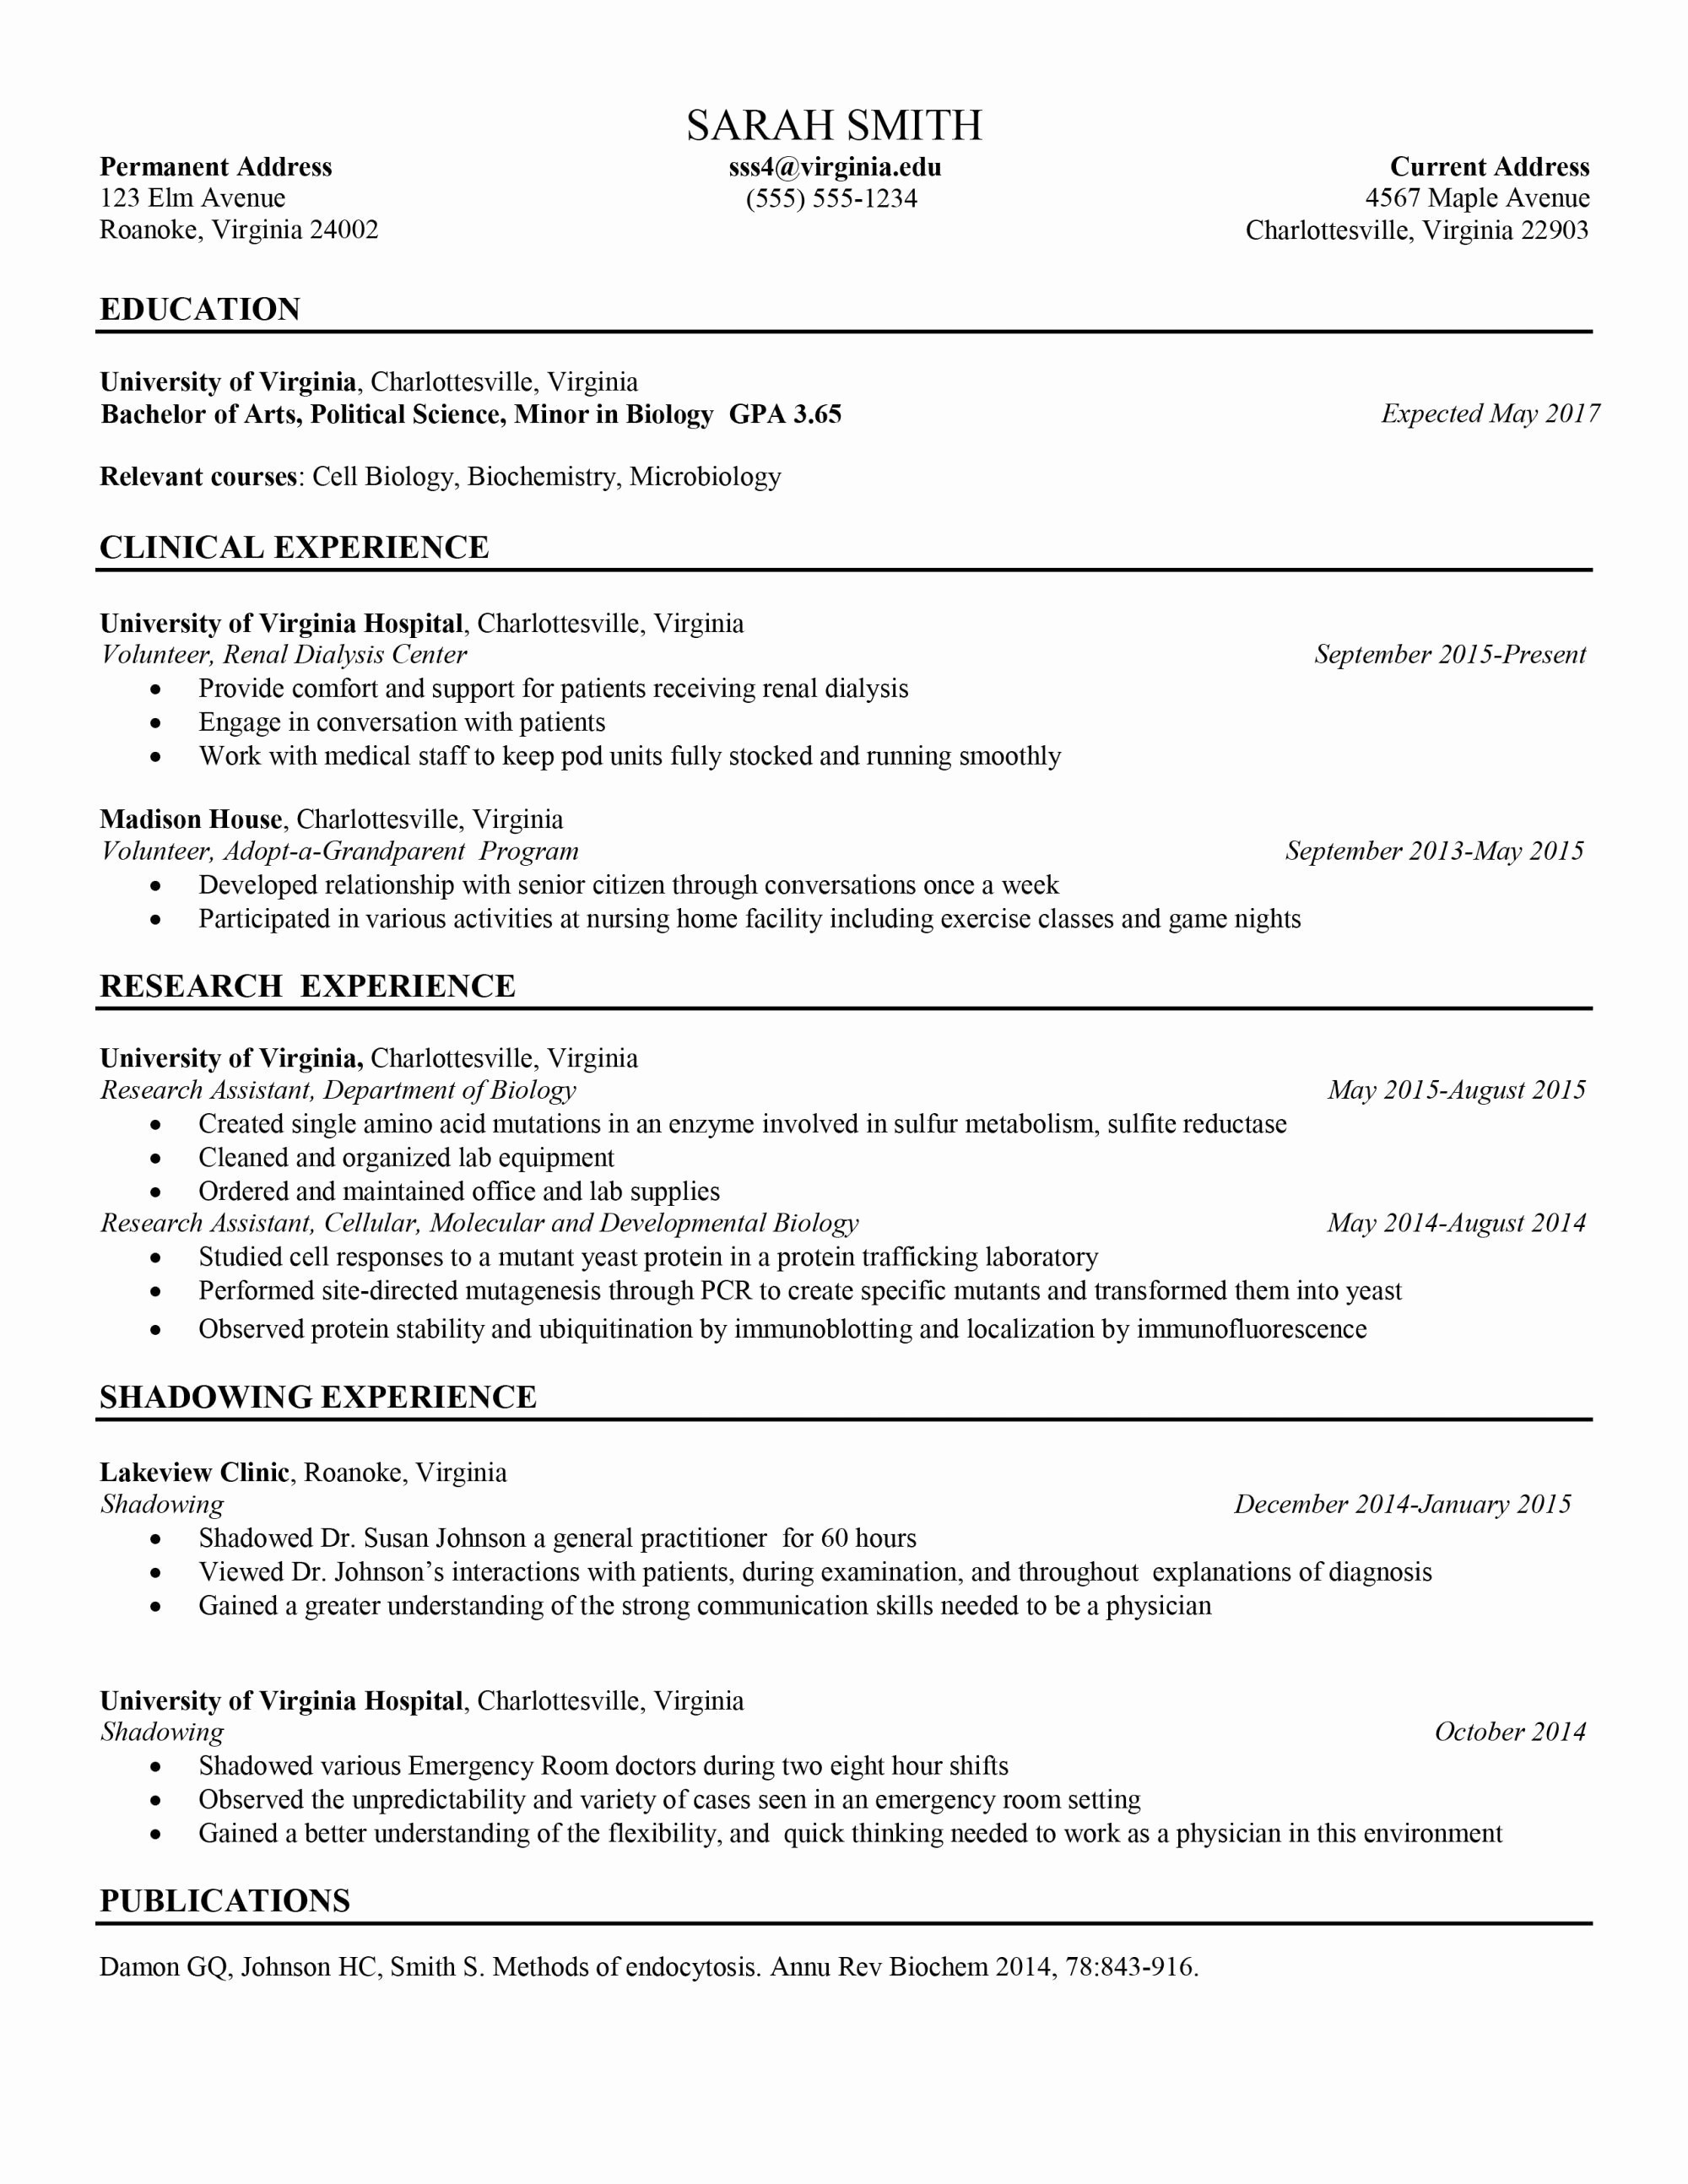 Professional Resume Writers Professional Resume Writing professional resume writers|wikiresume.com